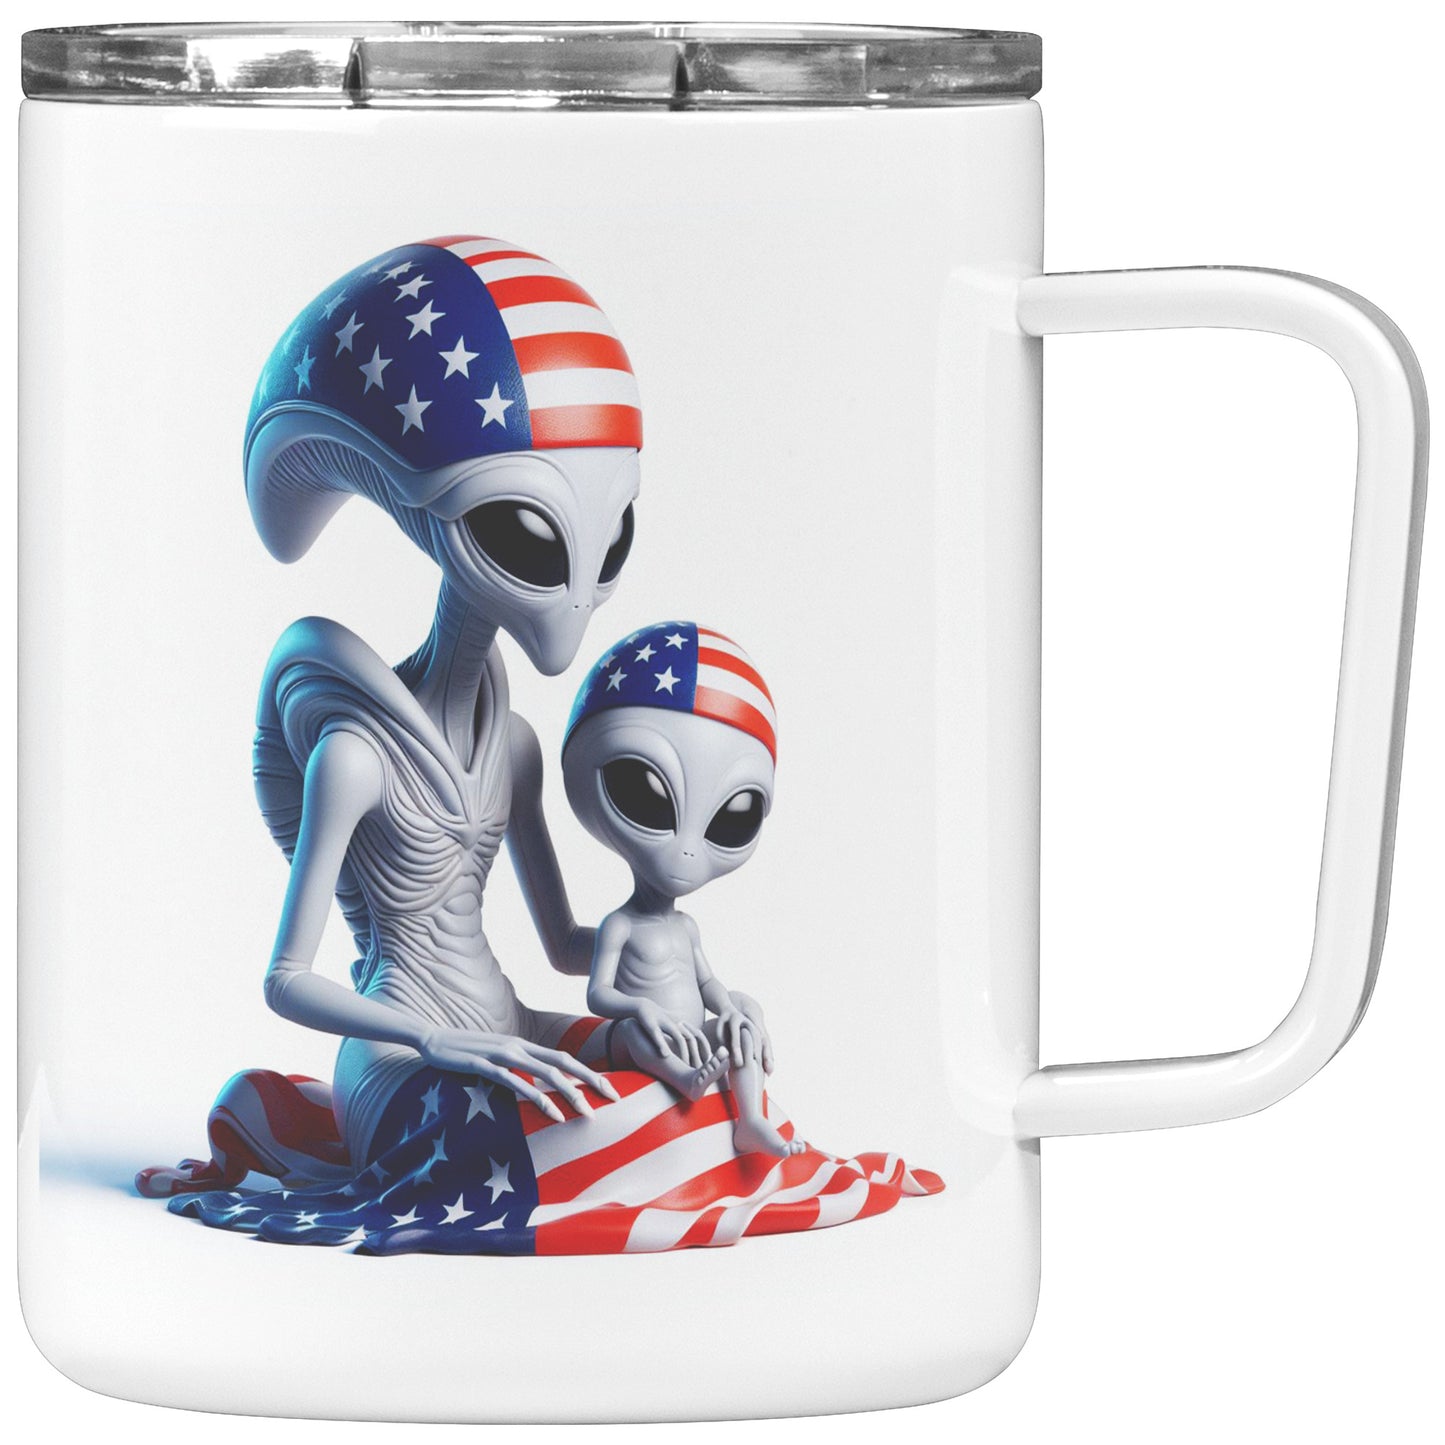 Nebulon the Grey Alien - Insulated Coffee Mug #30